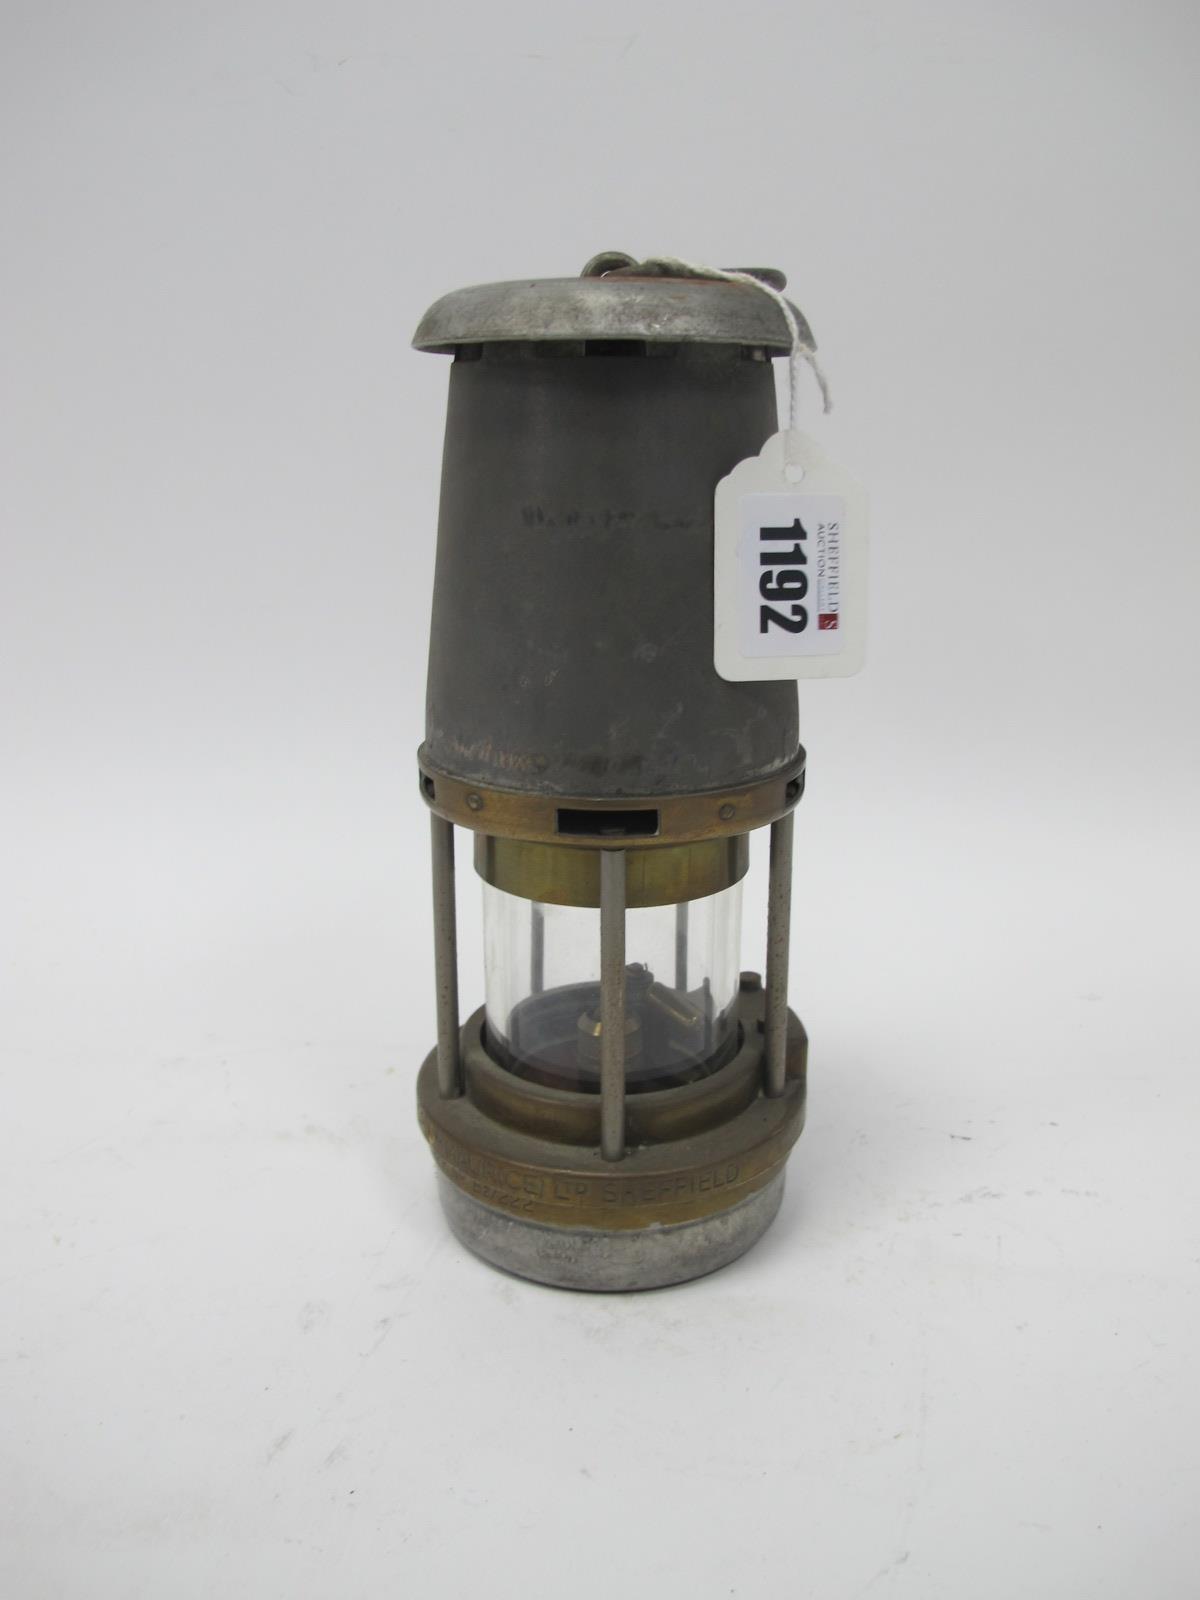 Miners Lamp, The Wolf Safety Lamp (Wm Maurice, Ltd, Sheffield, wolf Type Fg, App No B2/222, 21cm